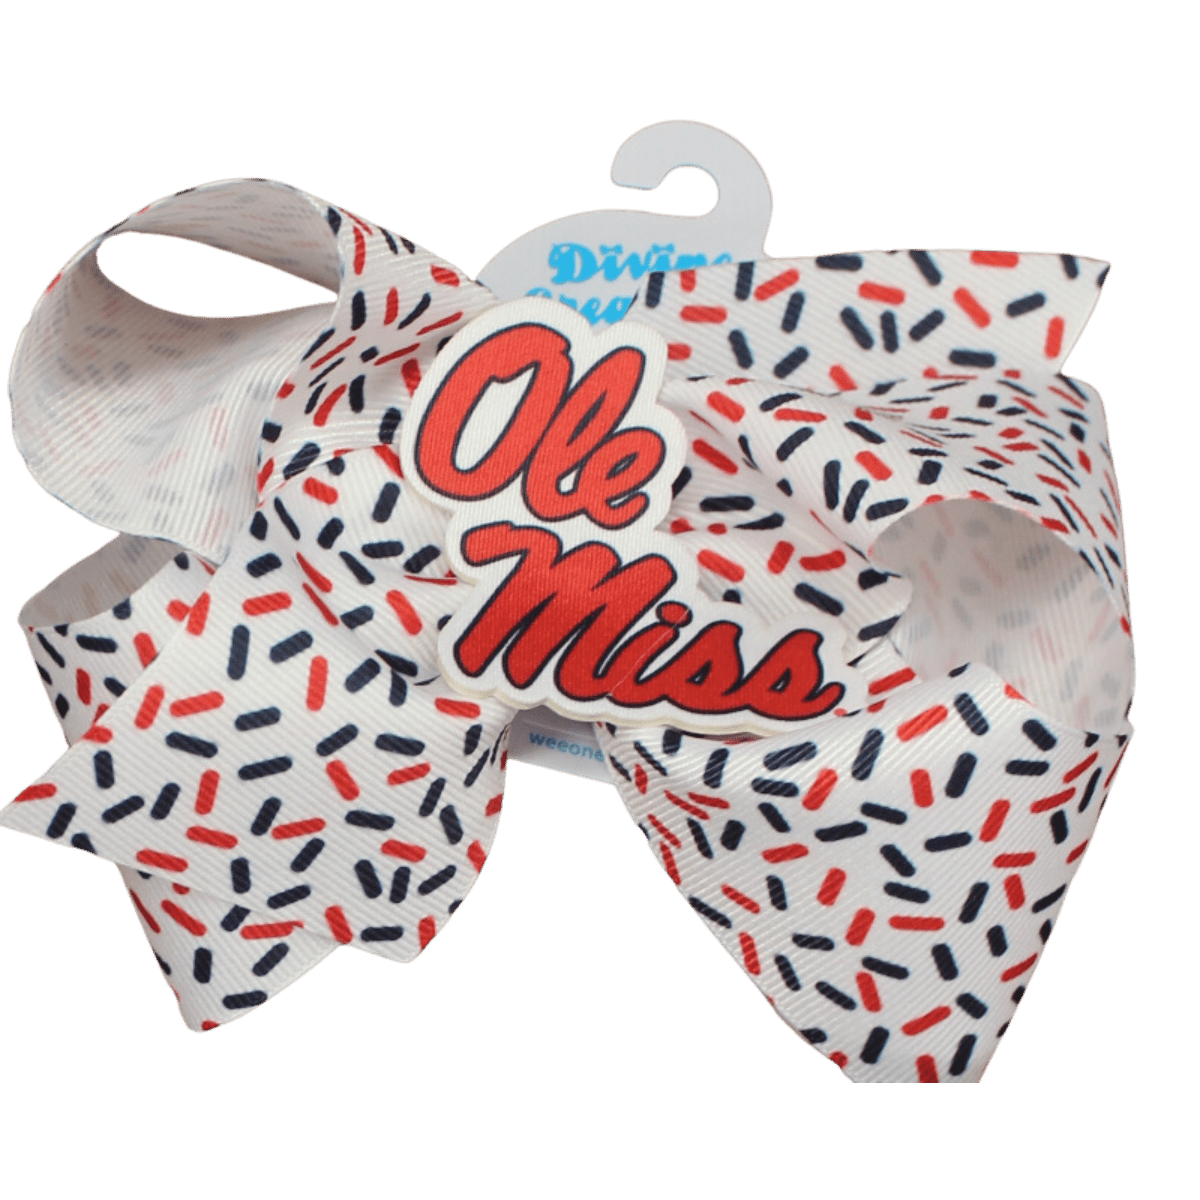 University of Mississippi Kids Bow - Shop B-Unlimited